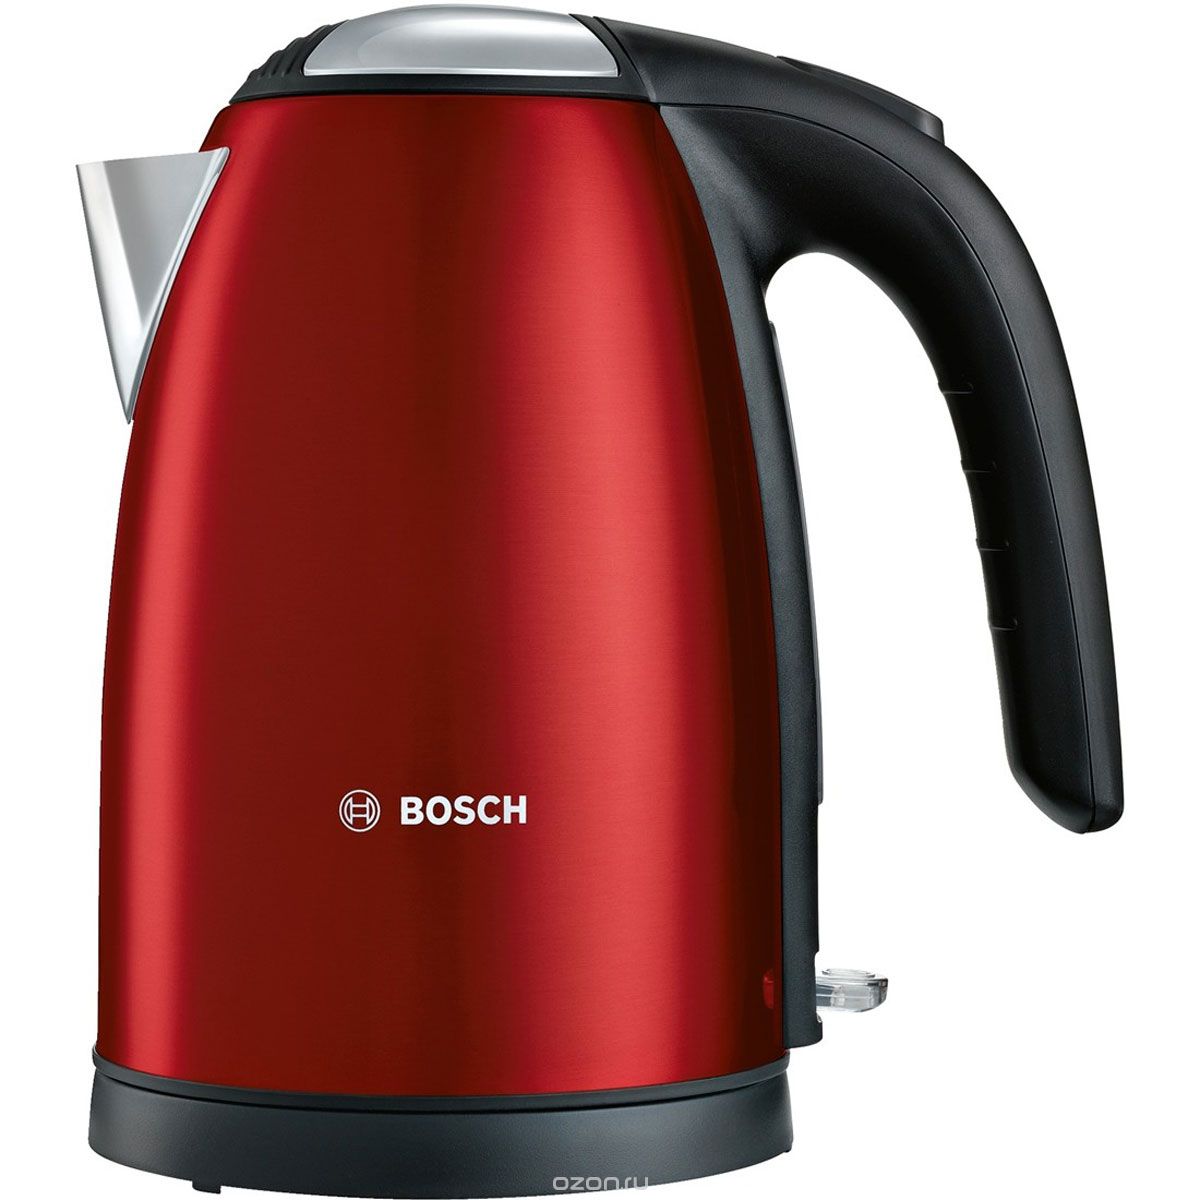 Bosch TWK 7804, Red 